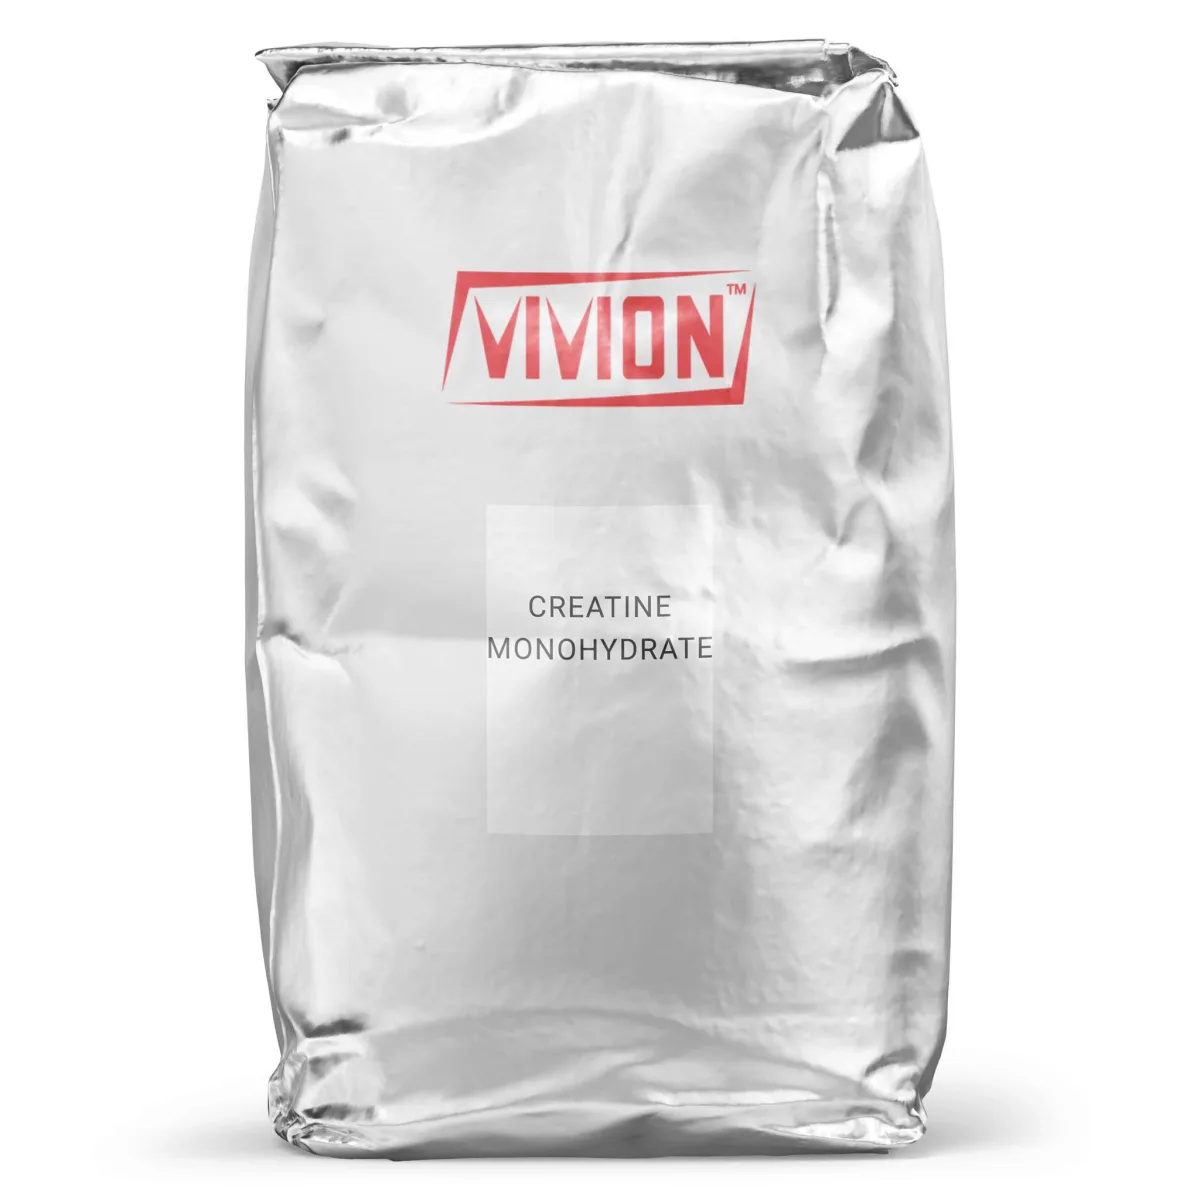 Bag of Vivion's wholesale Creatine Monohydrate.